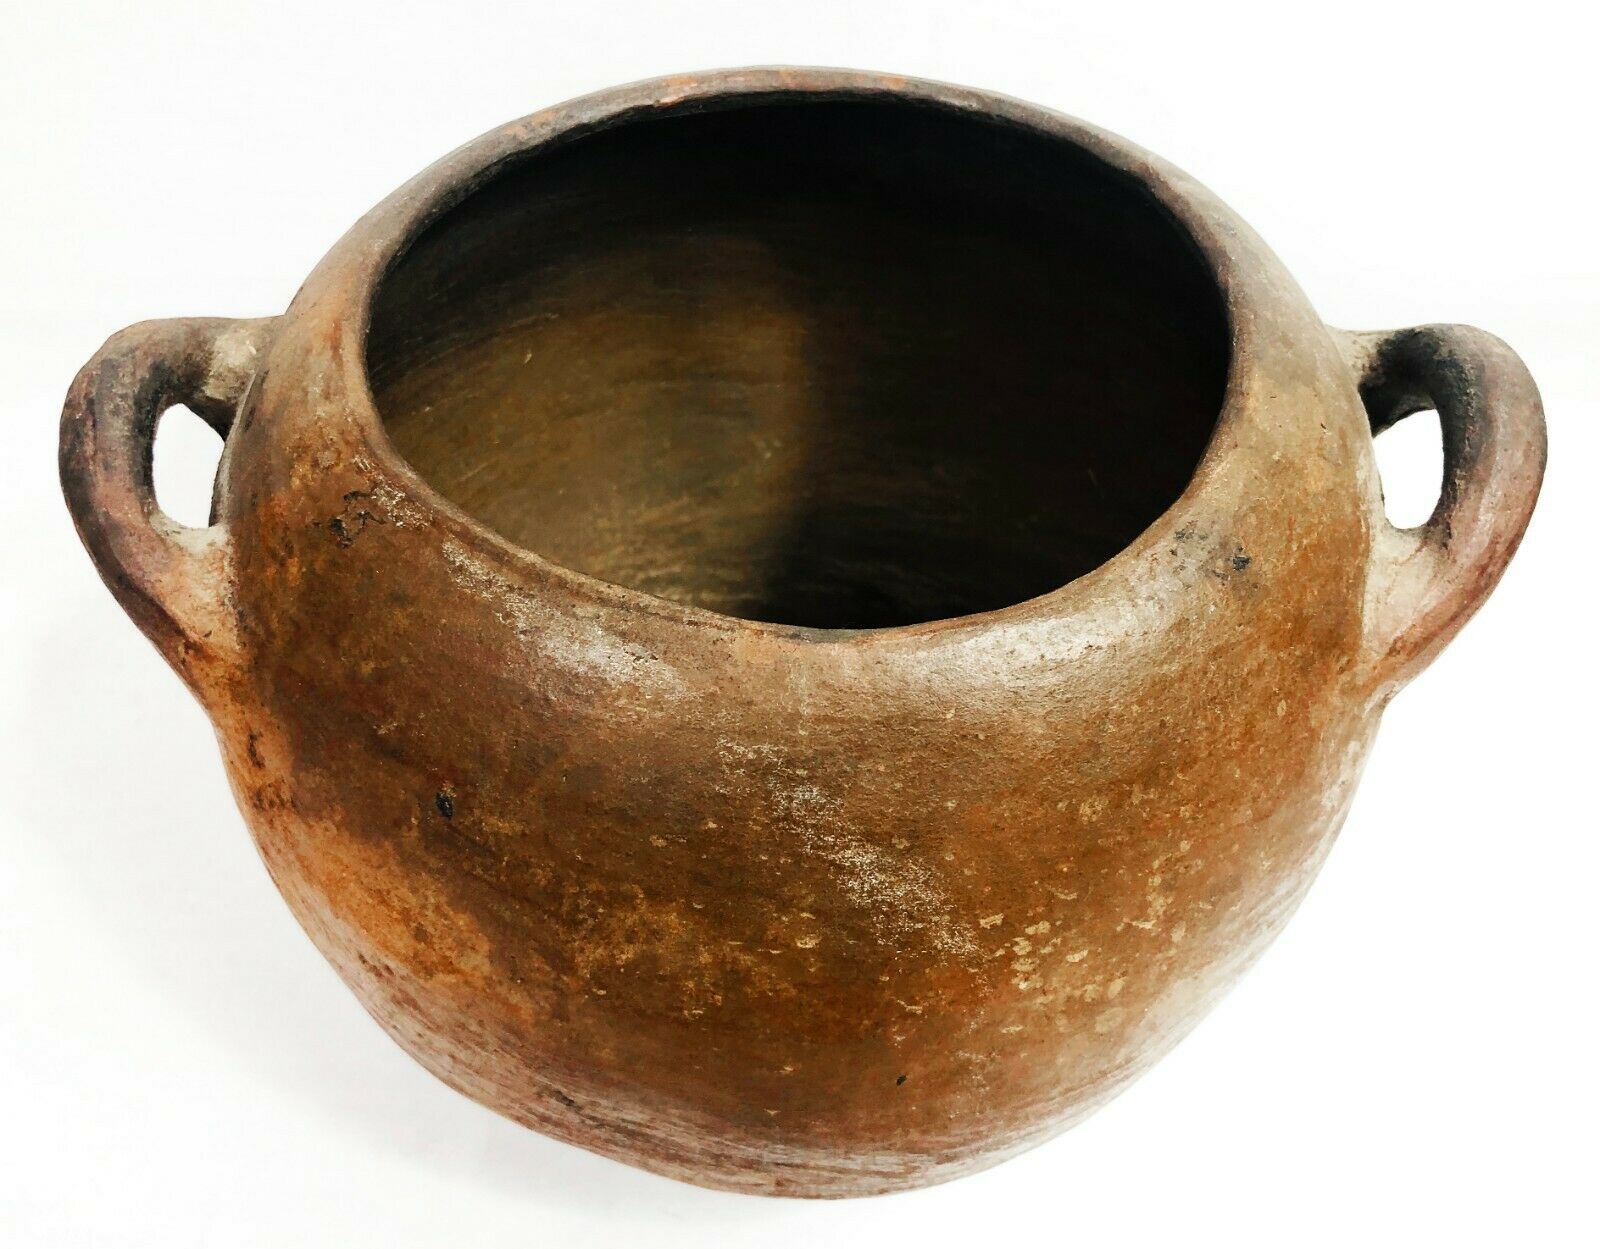 Anasazi Mogollon Cooking Pot 9x7 1/2 Ancient Pottery Museum Quality Artifact